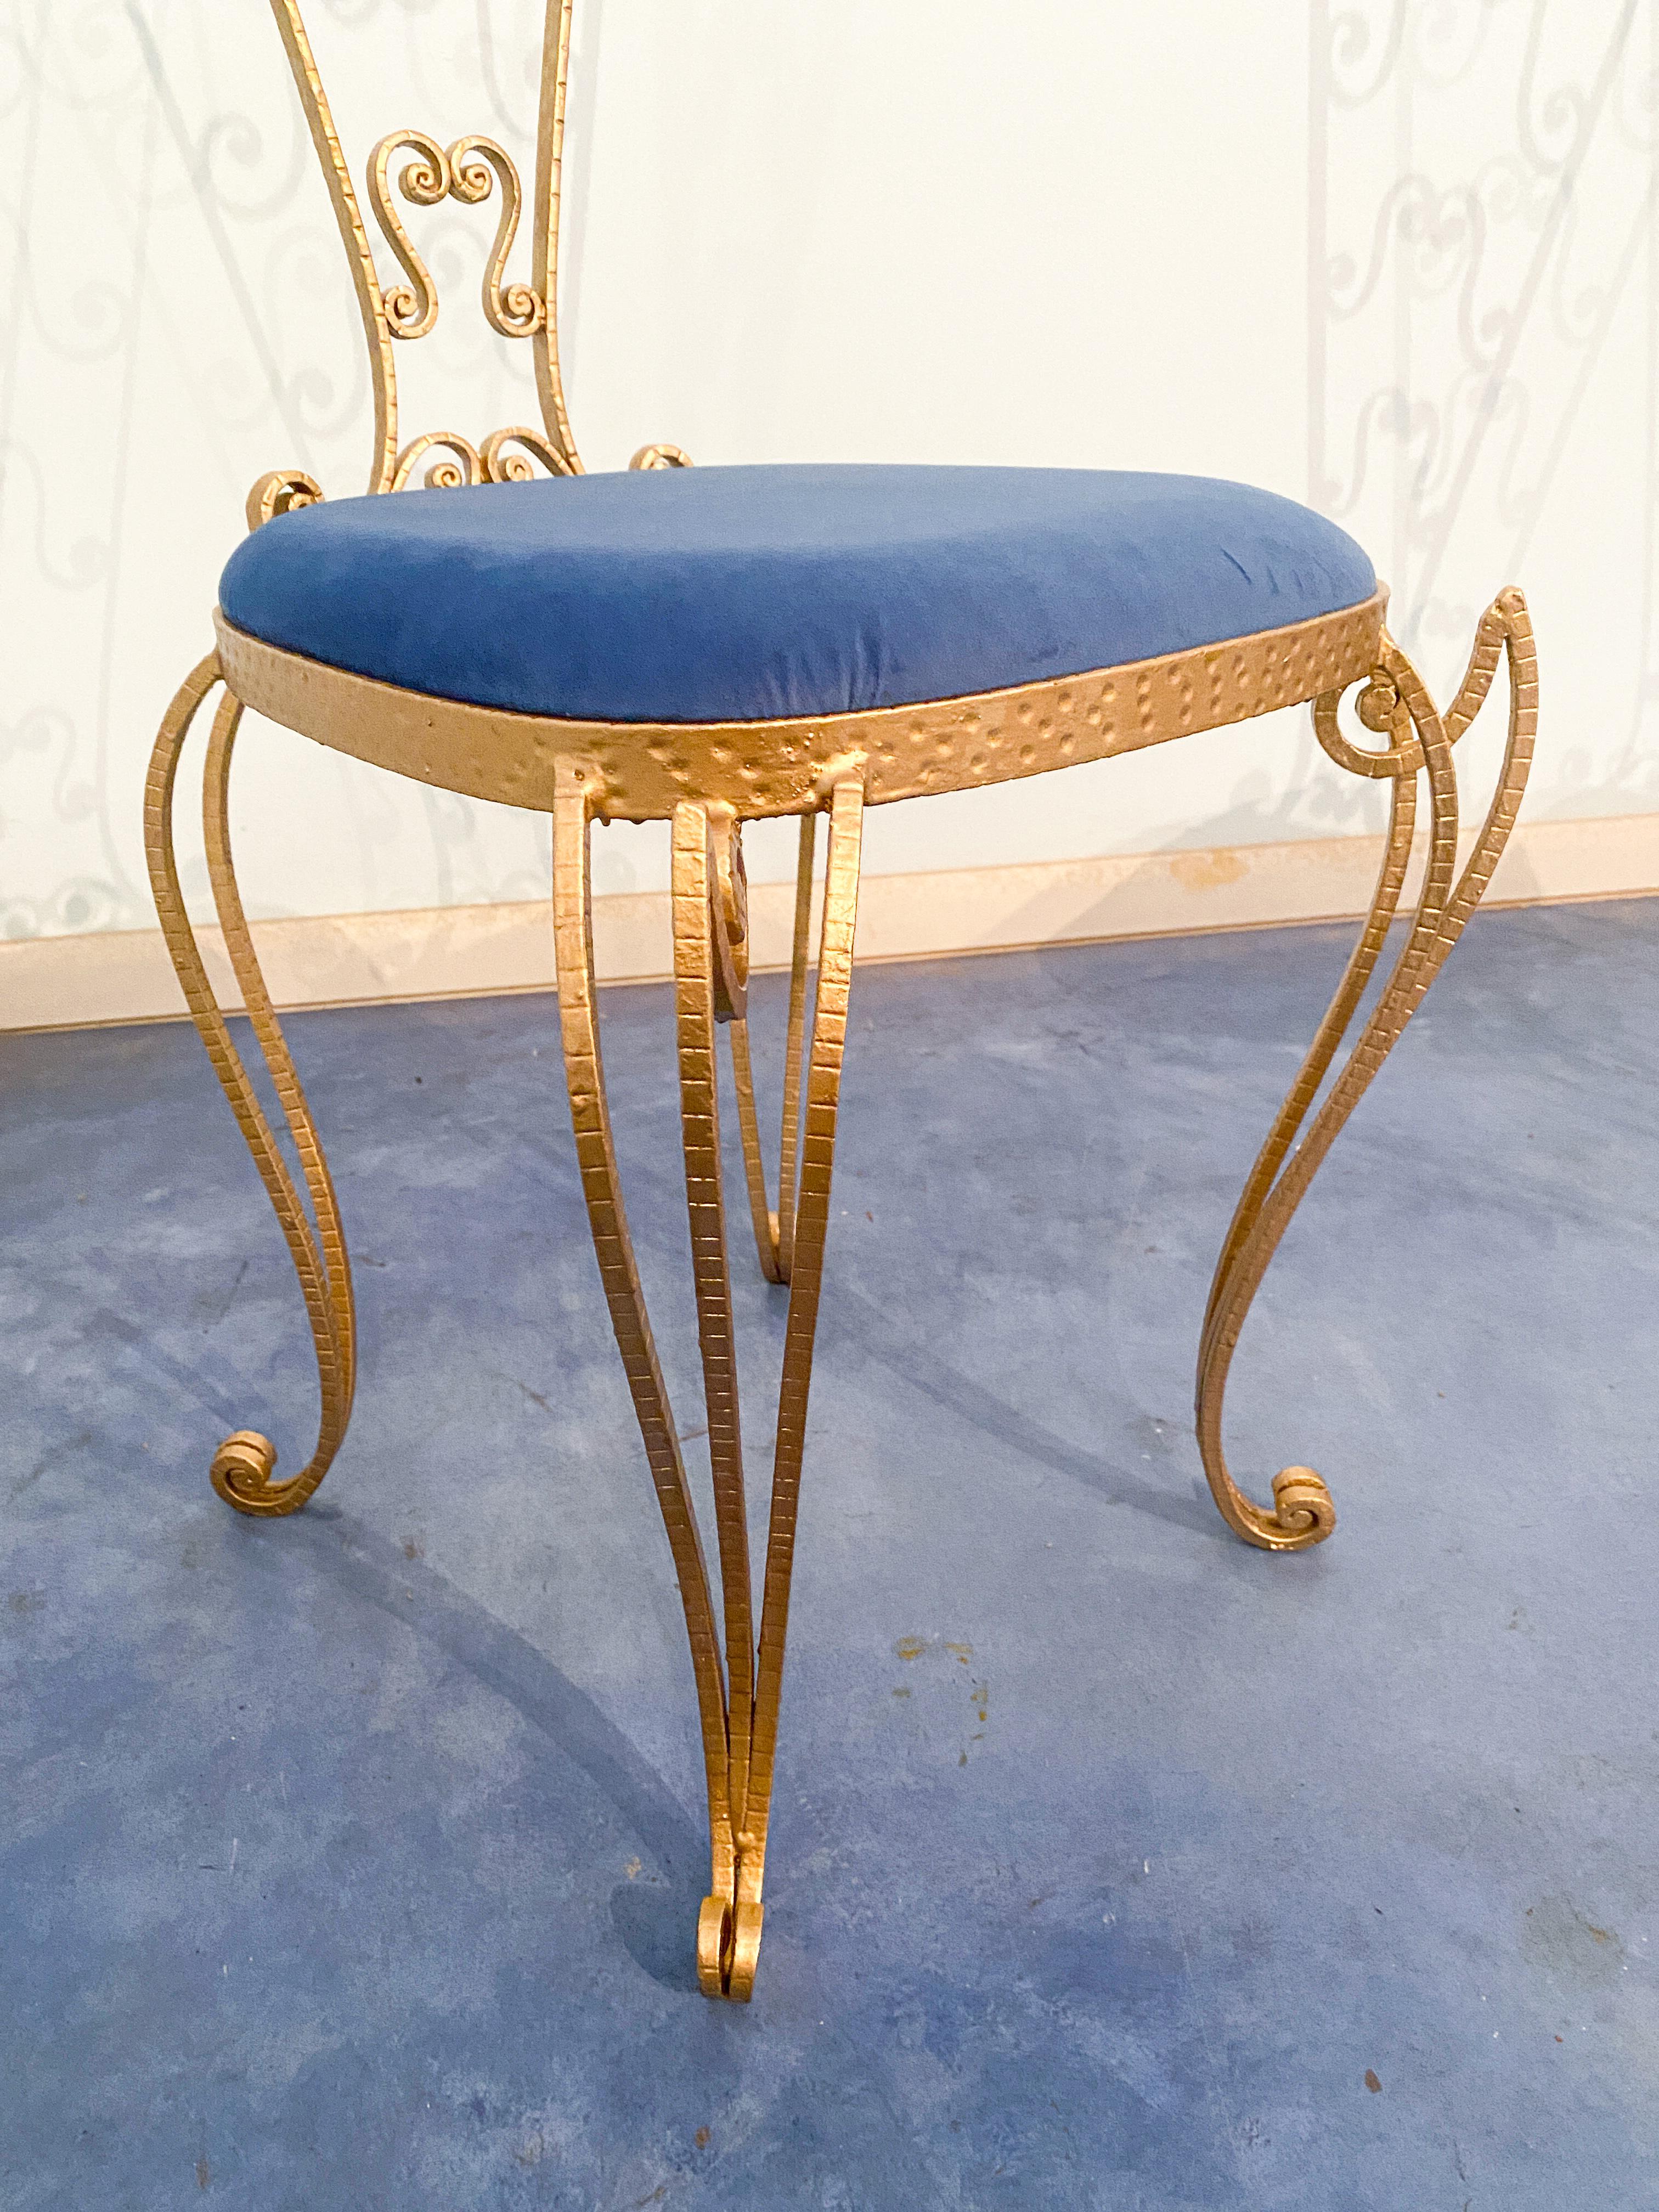 Pair of Italian Mid-Century Modern Luigi Colli Gold Iron Vanity Chairs, 1950s For Sale 1